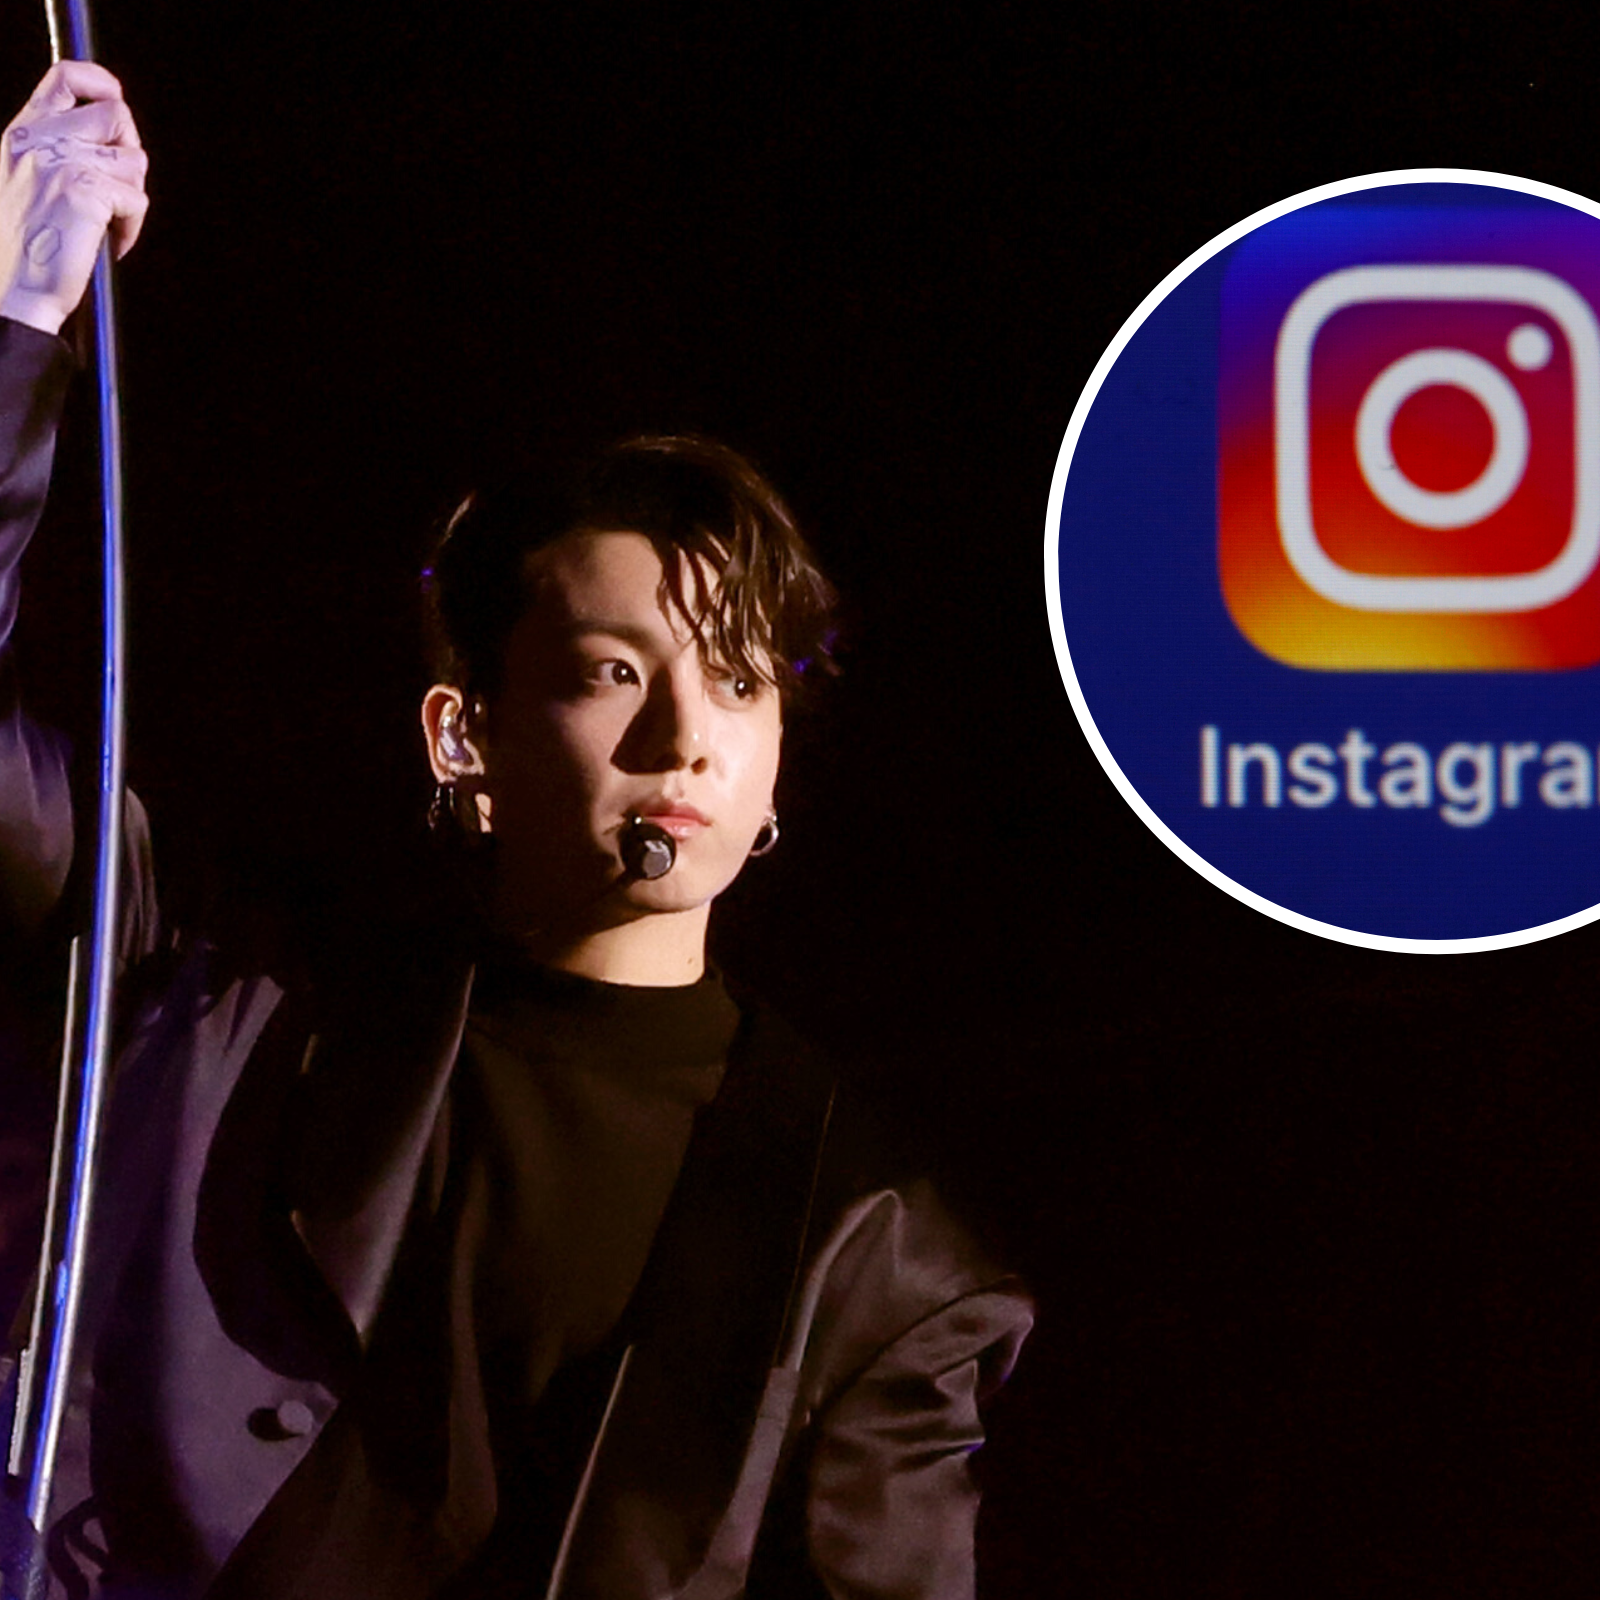 Why did BTS' Jungkook leave Instagram?